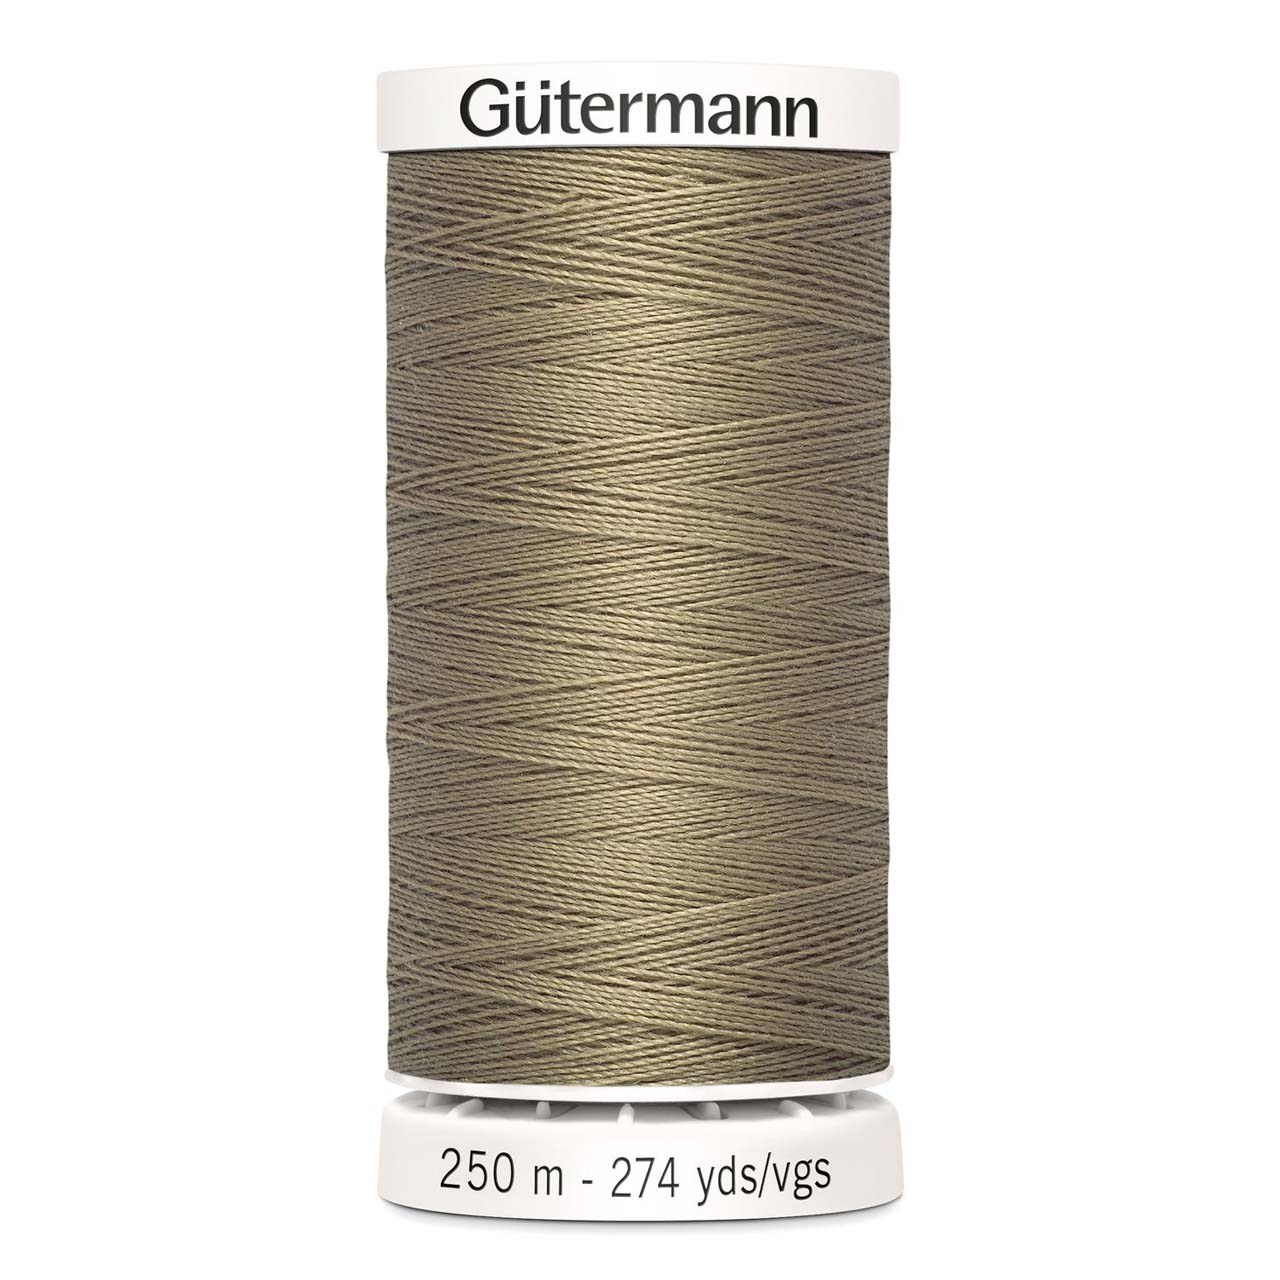 Gutermann thread 868 sewing thread 250 metres